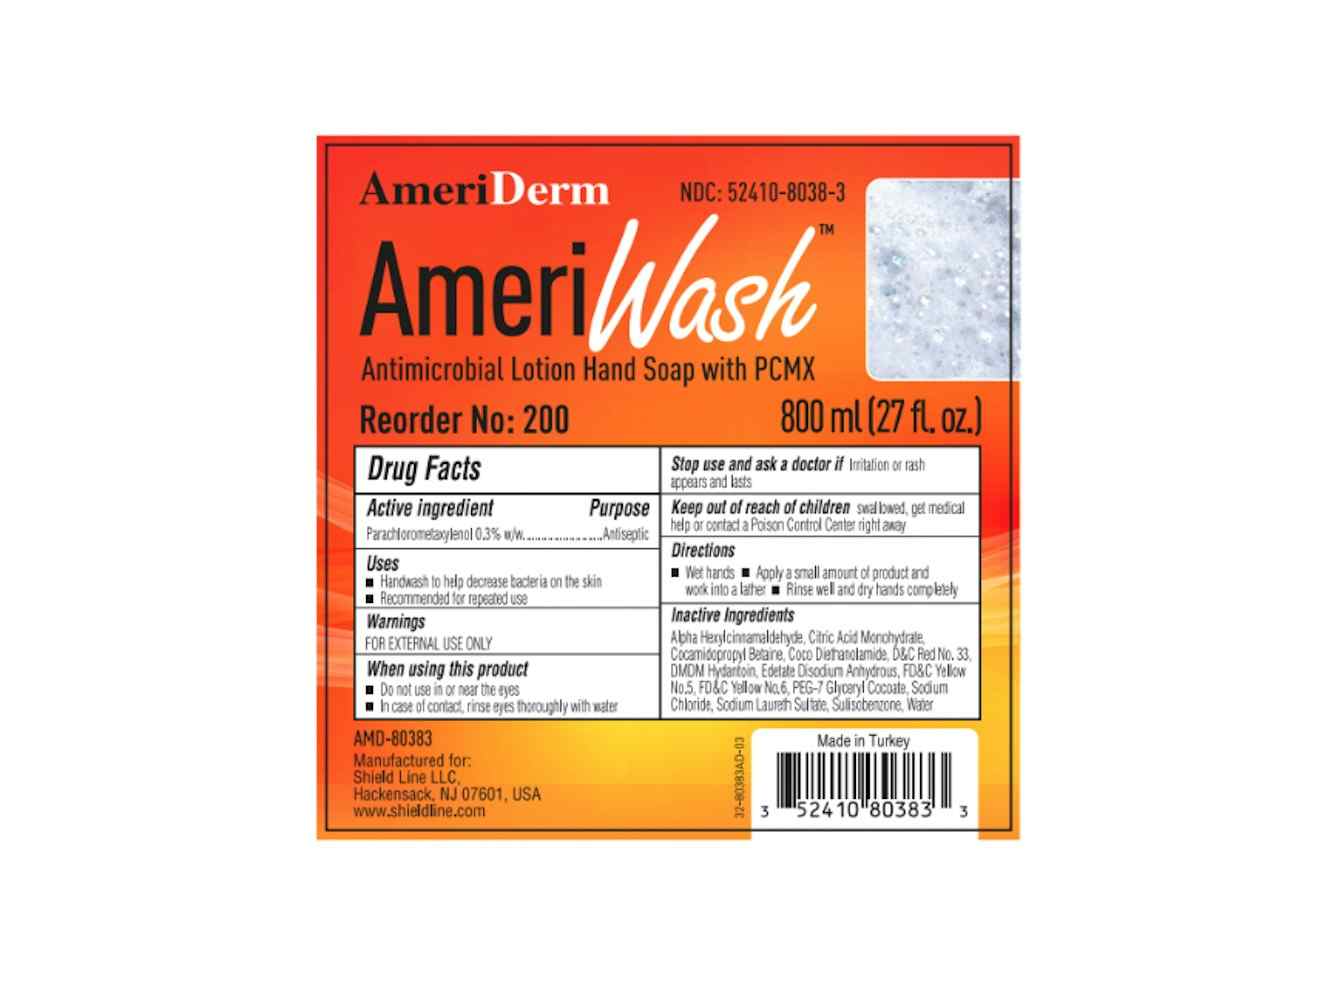 Ameriderm AmeriWash Anti-Microbial Lotion Soap with PCMX